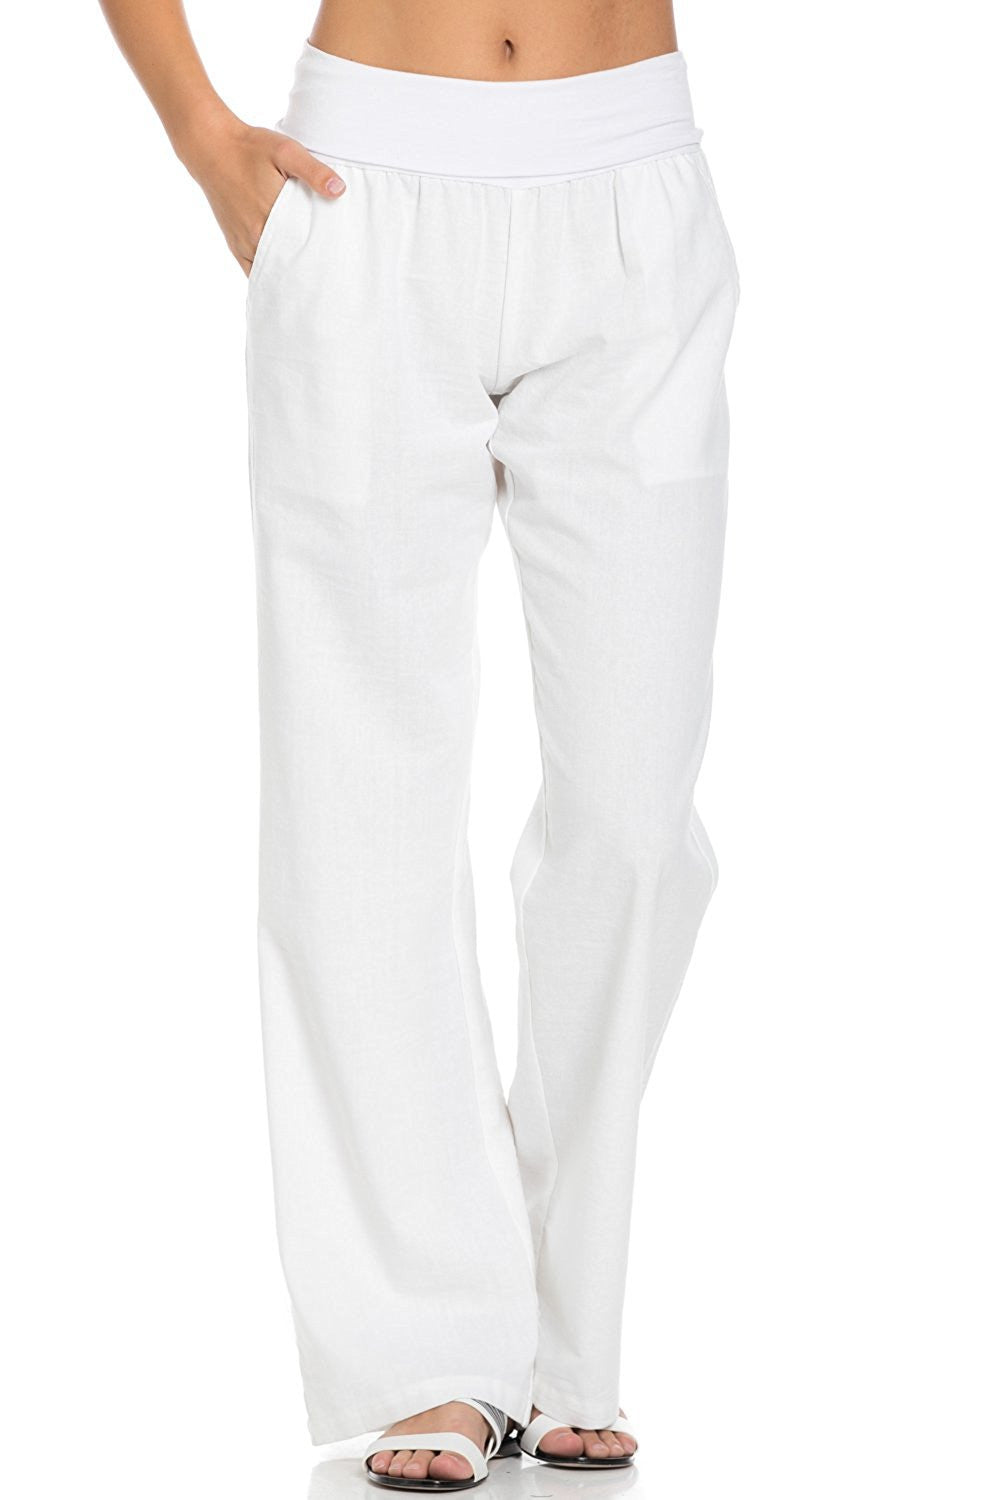 Comfy Fold Over Linen Pants (White)